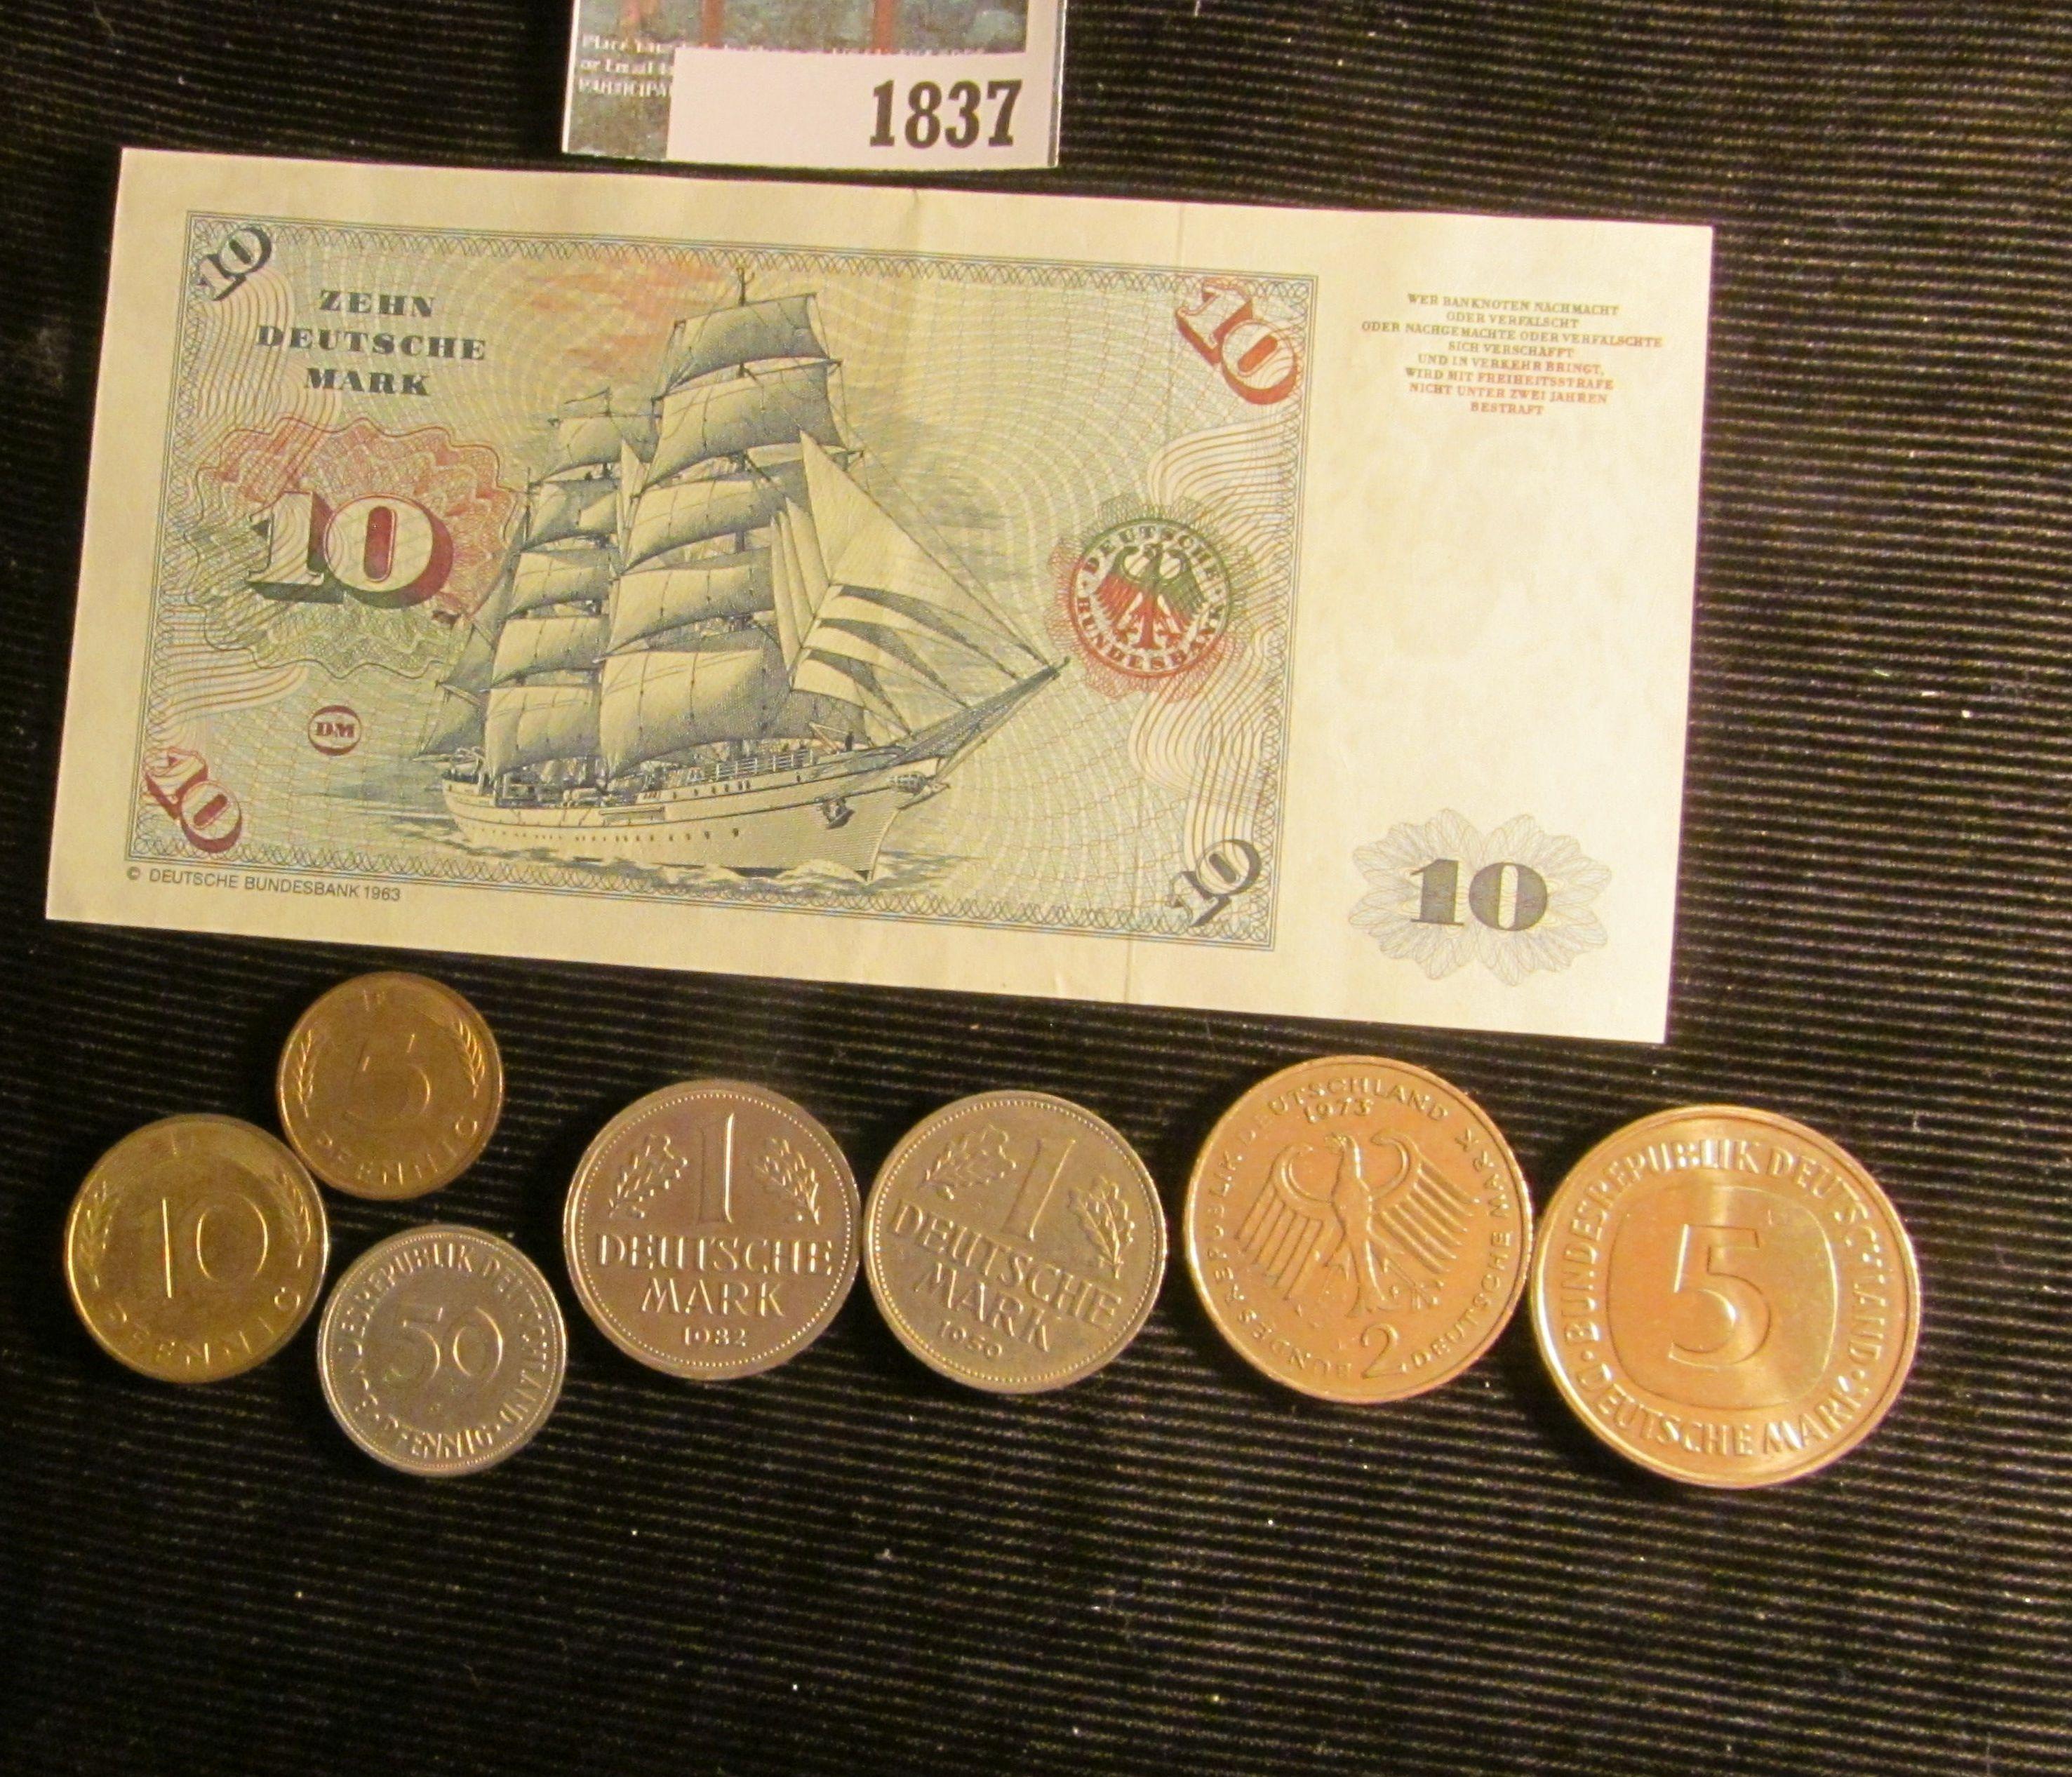 Series 1980 German "Deutsche Bundesbank" 10 Mark Note in VF; & several German Coins with up to Five